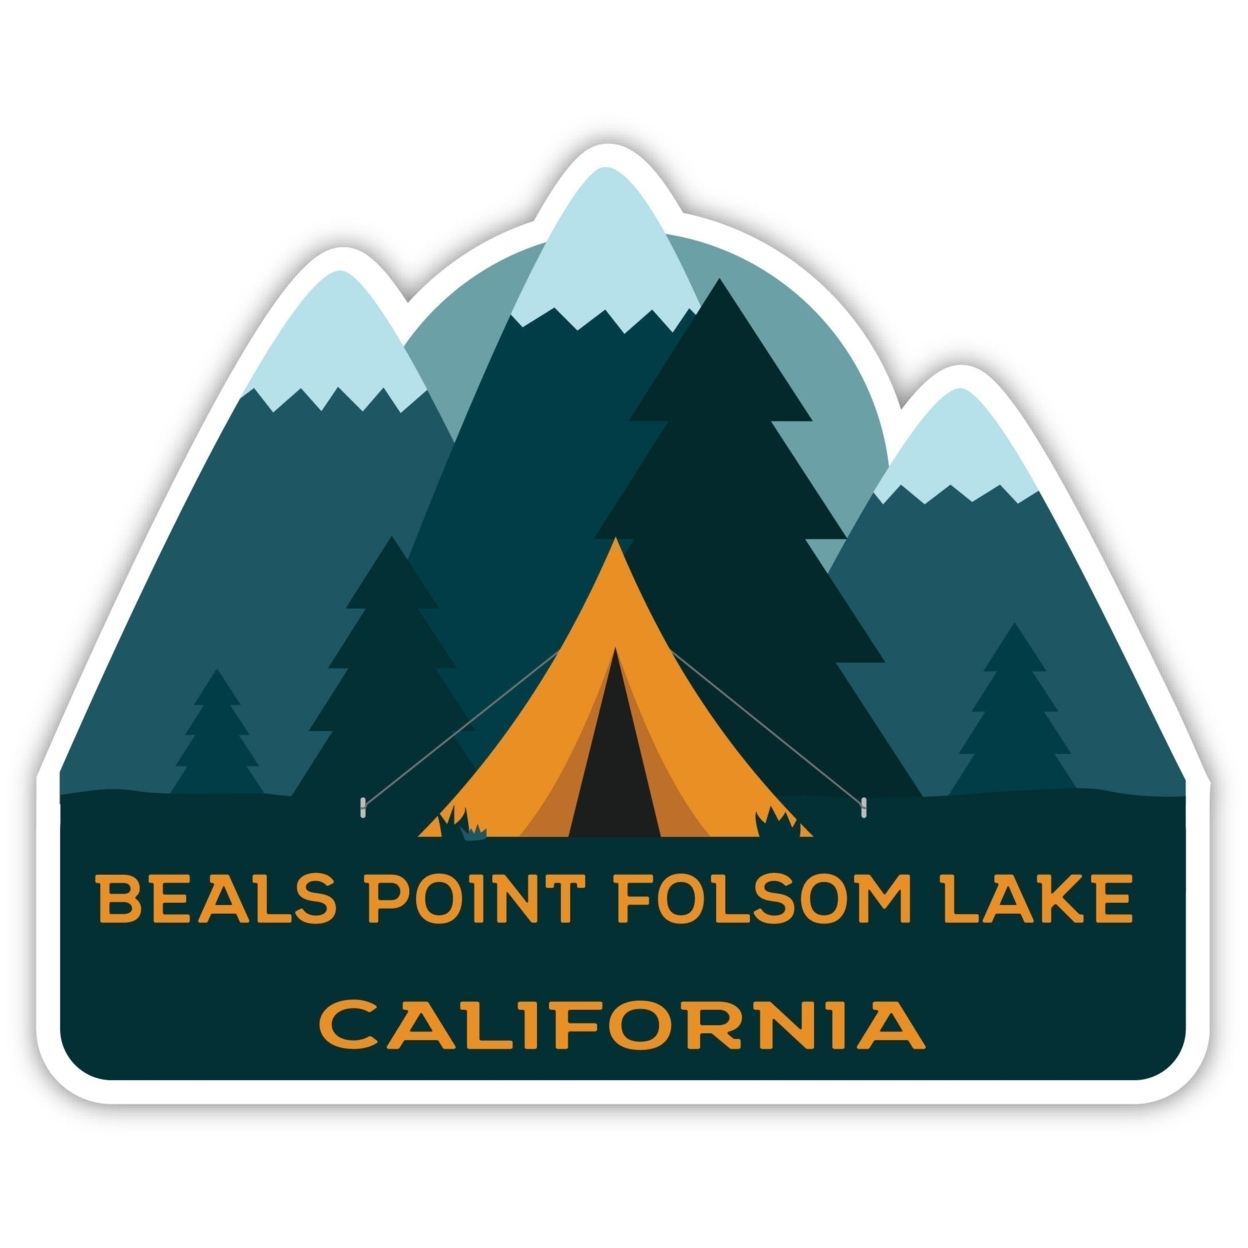 Beals Point Folsom Lake California Souvenir Decorative Stickers (Choose Theme And Size) - Single Unit, 4-Inch, Tent